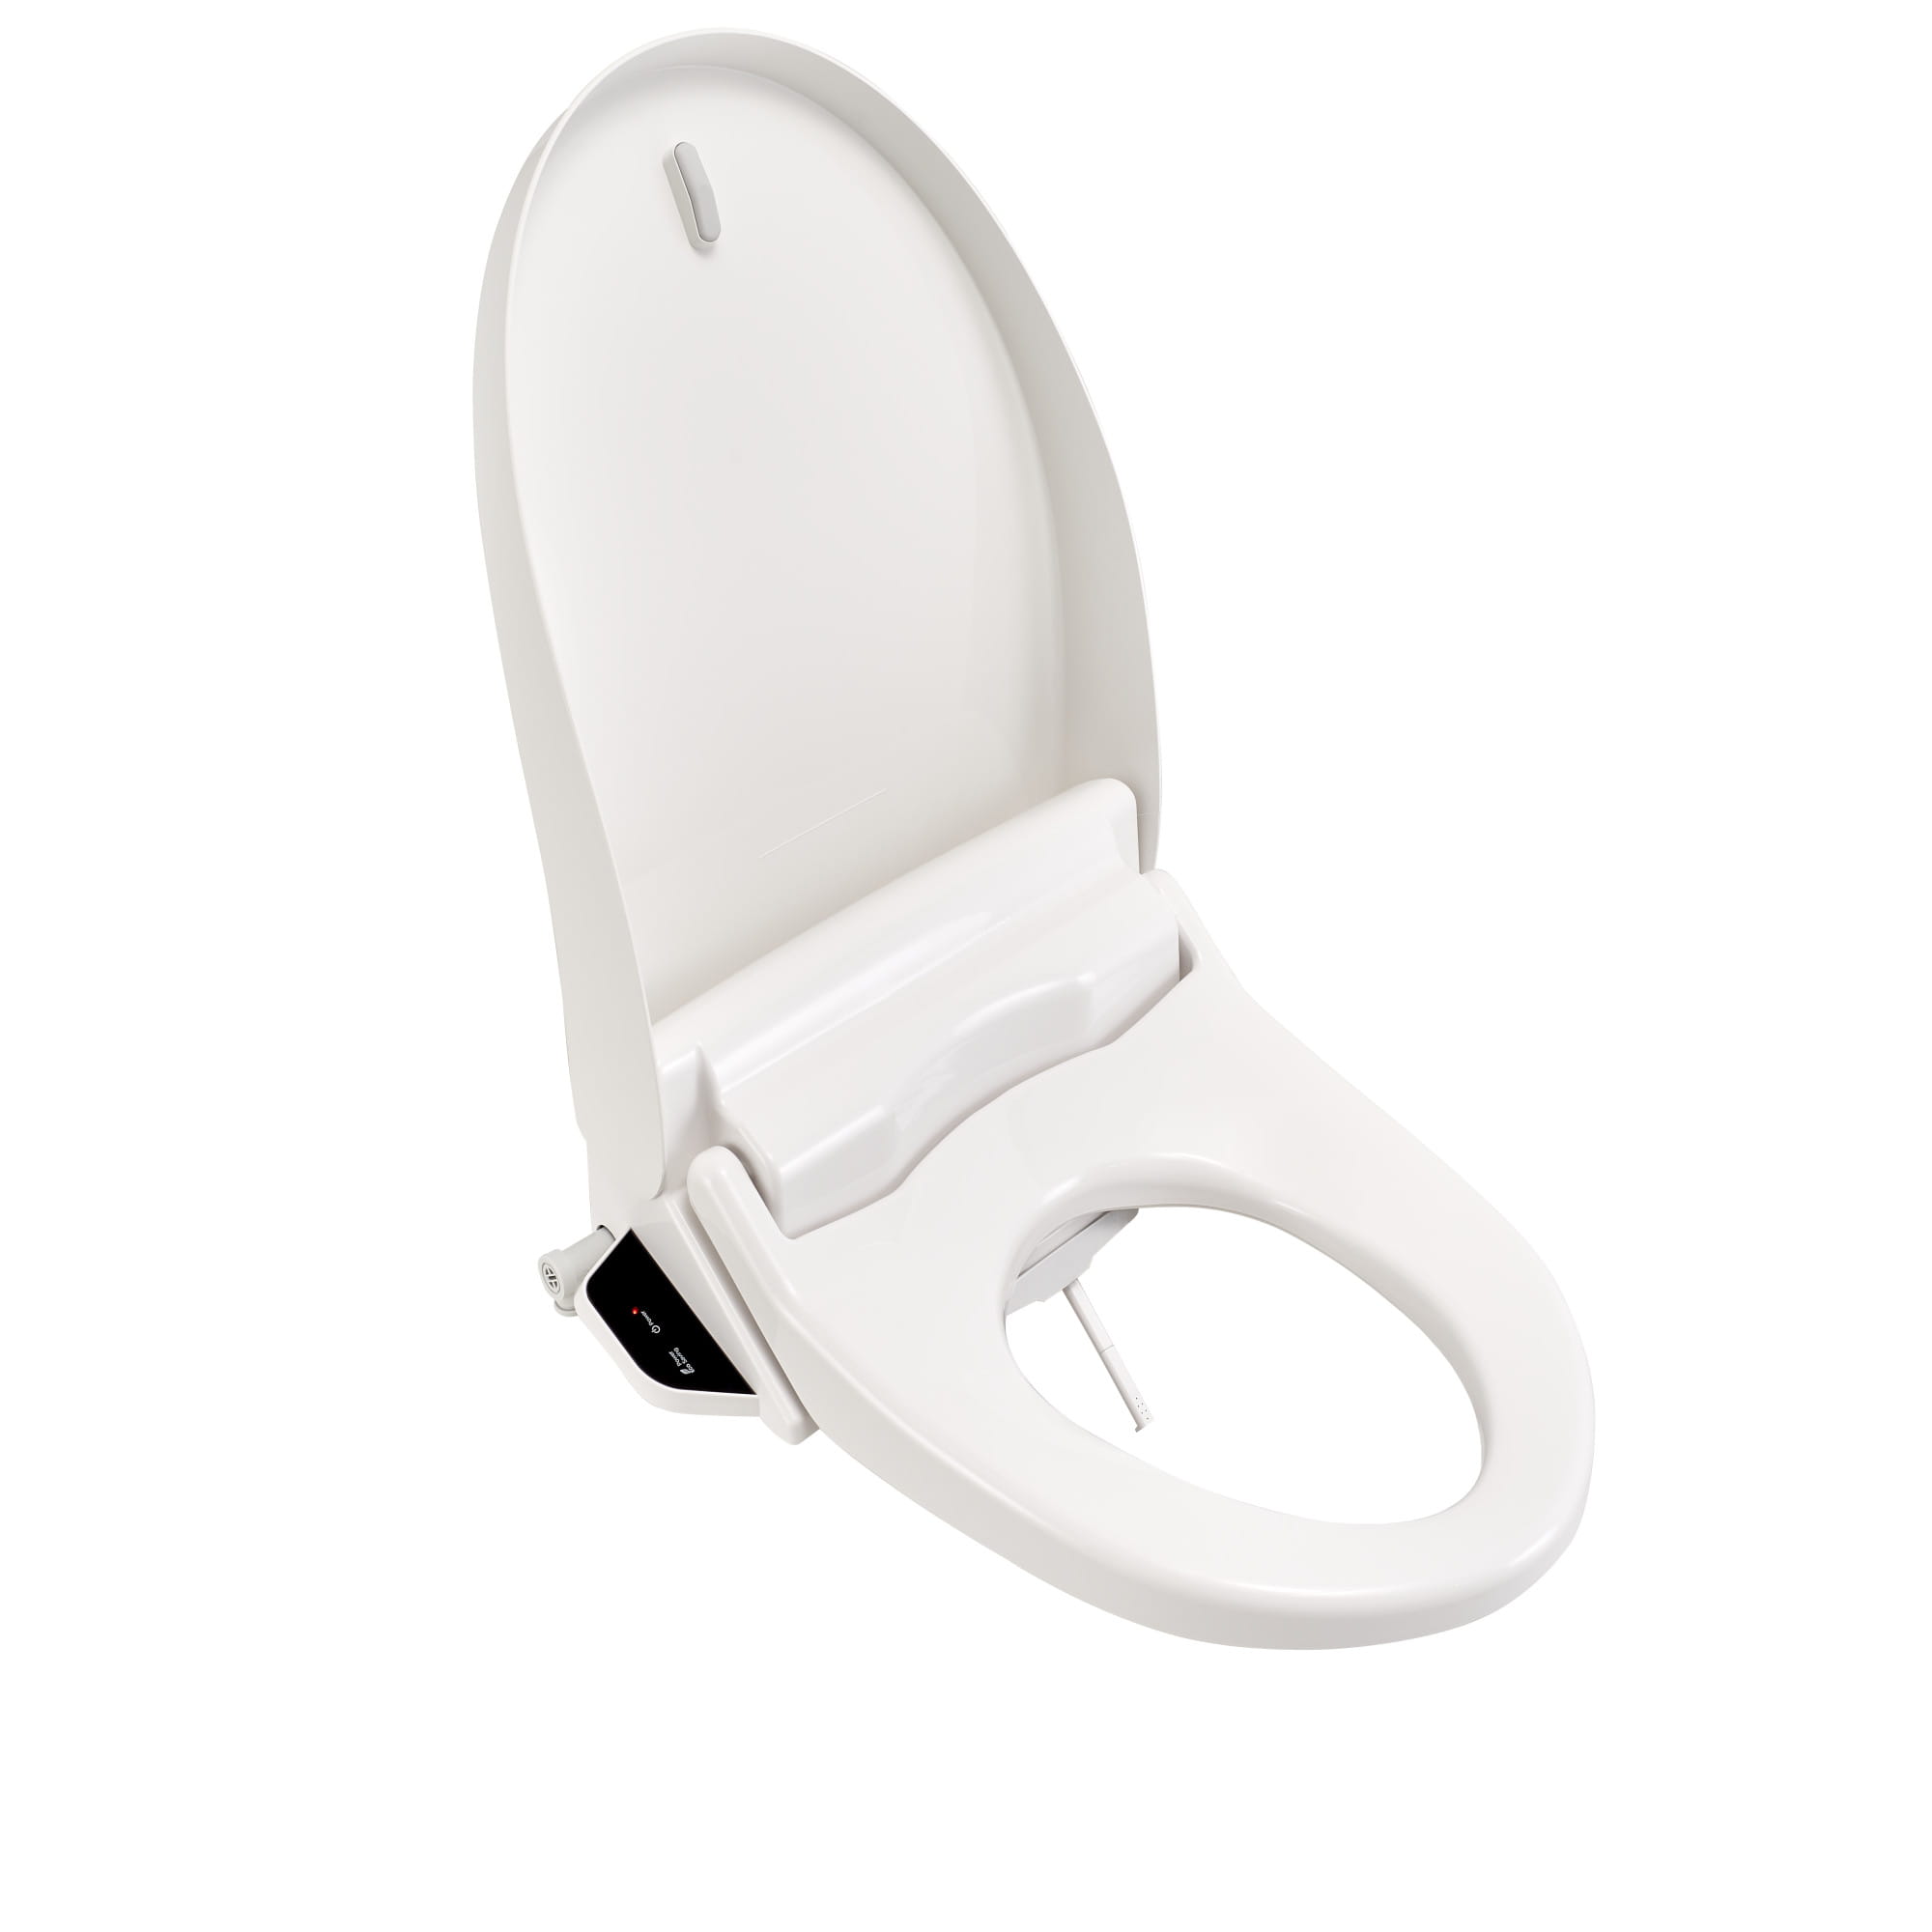 leninismen vinkel Mince Advanced Clean® 2.0 Electric SpaLet® Bidet Seat With Remote Operation